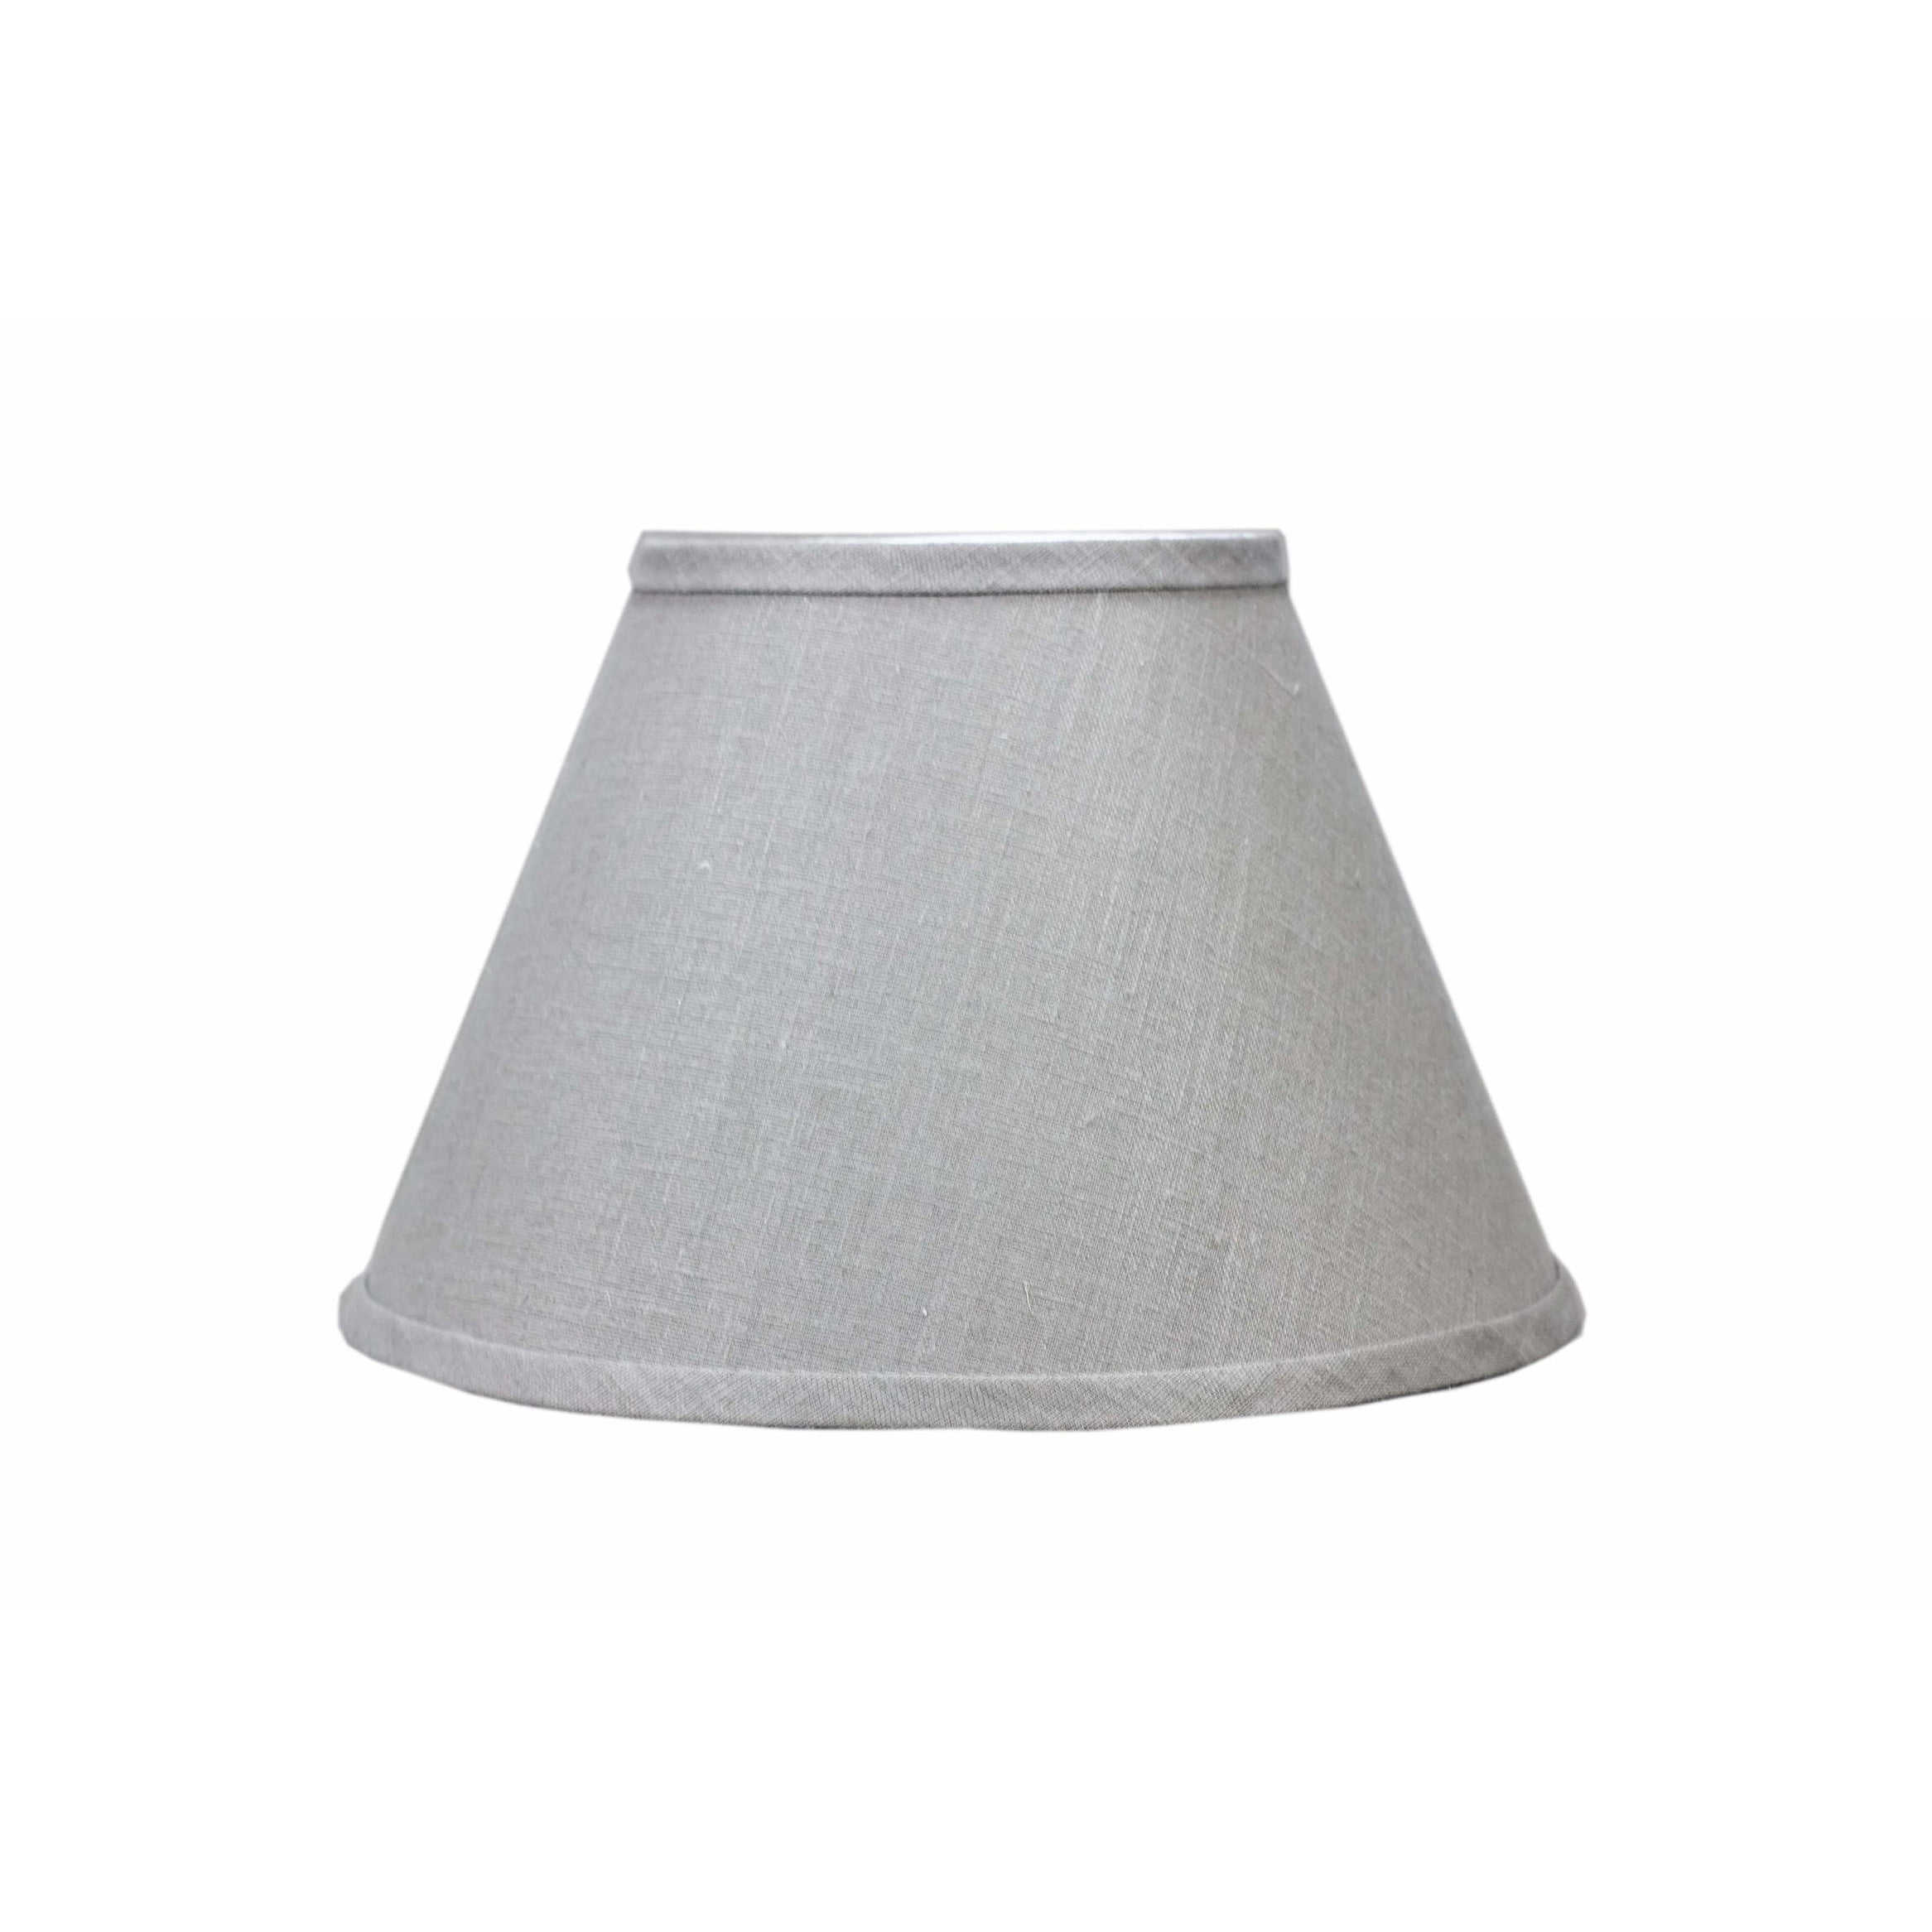 Somette Dark Grey Linen Empire Lamp Shades (Set of 4) - Walmart.com